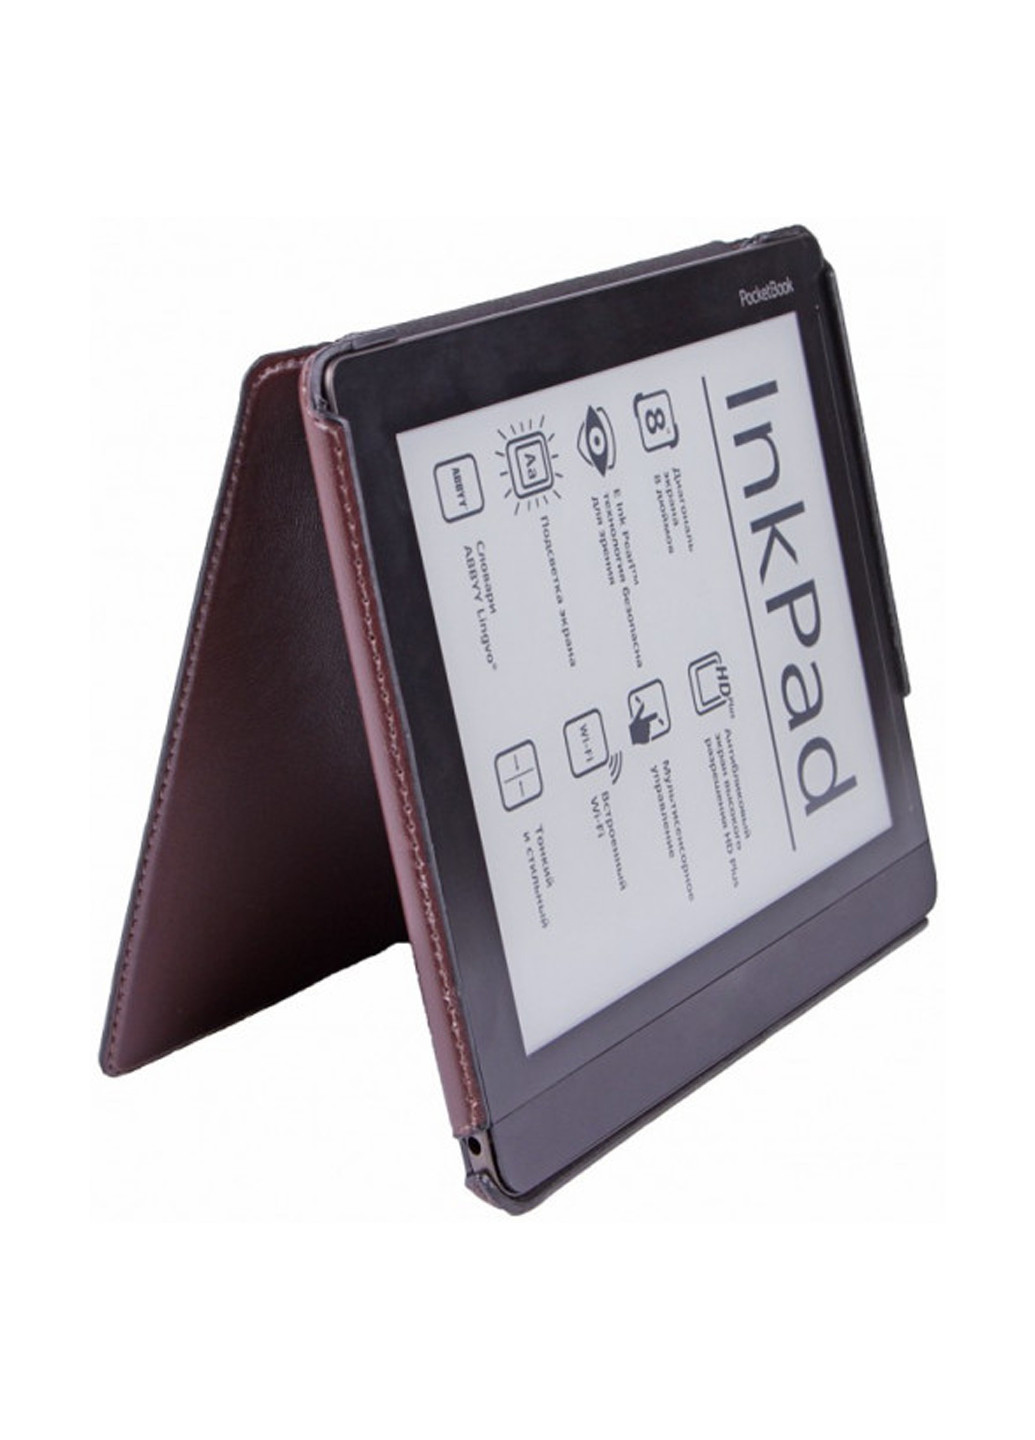 Чехол Premium для PocketBook 840 brown (4821784622004) Airon premium для электронной книги pocketbook 840 brown (4821784622004) (158554737)